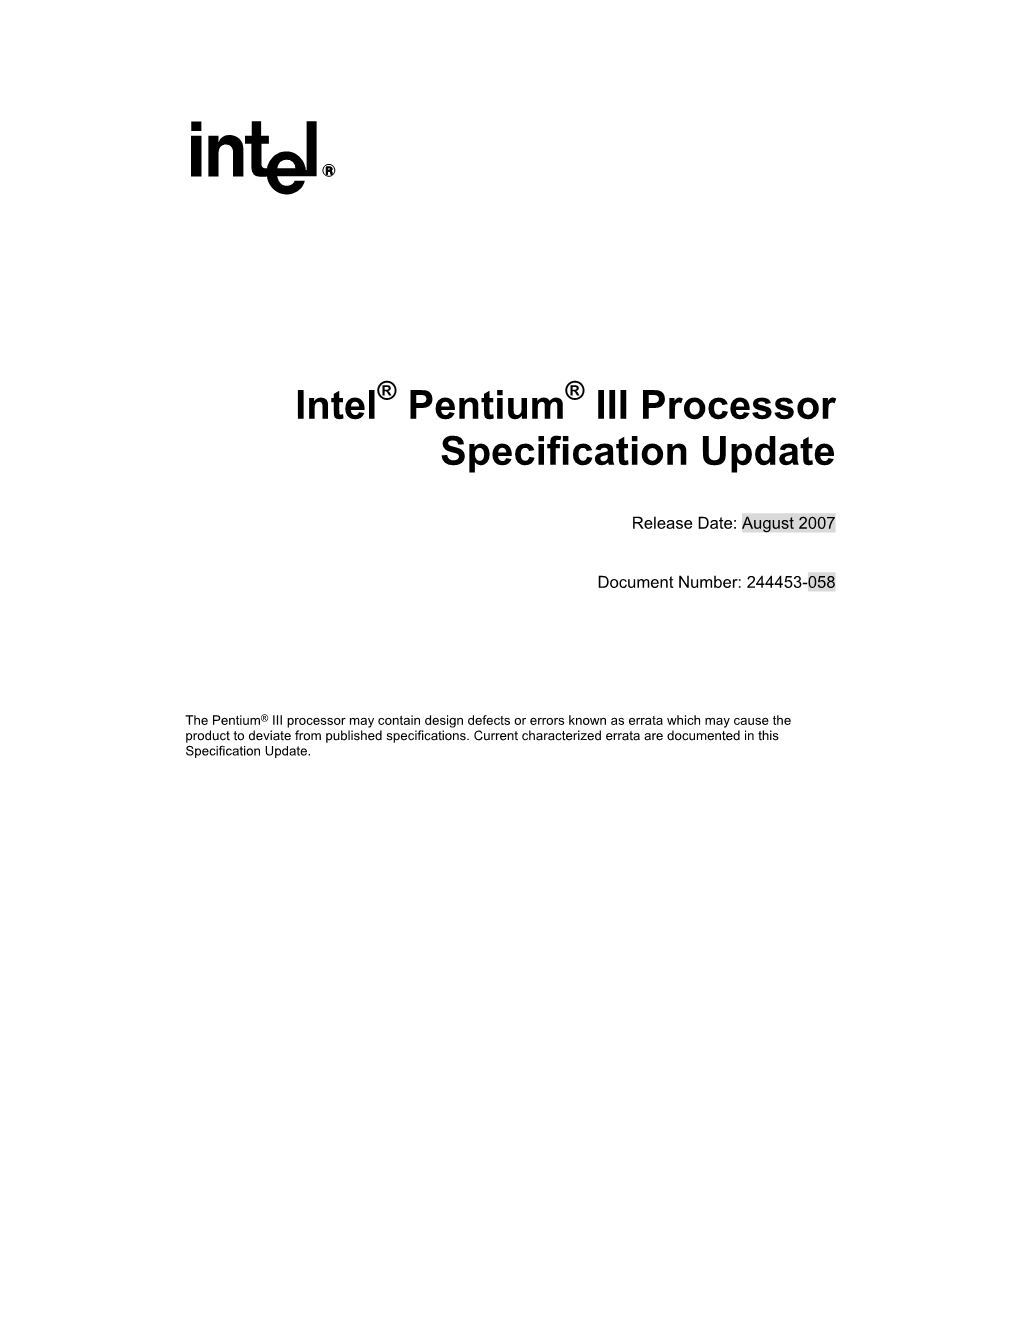 Intel Pentium III Processor Specification Update